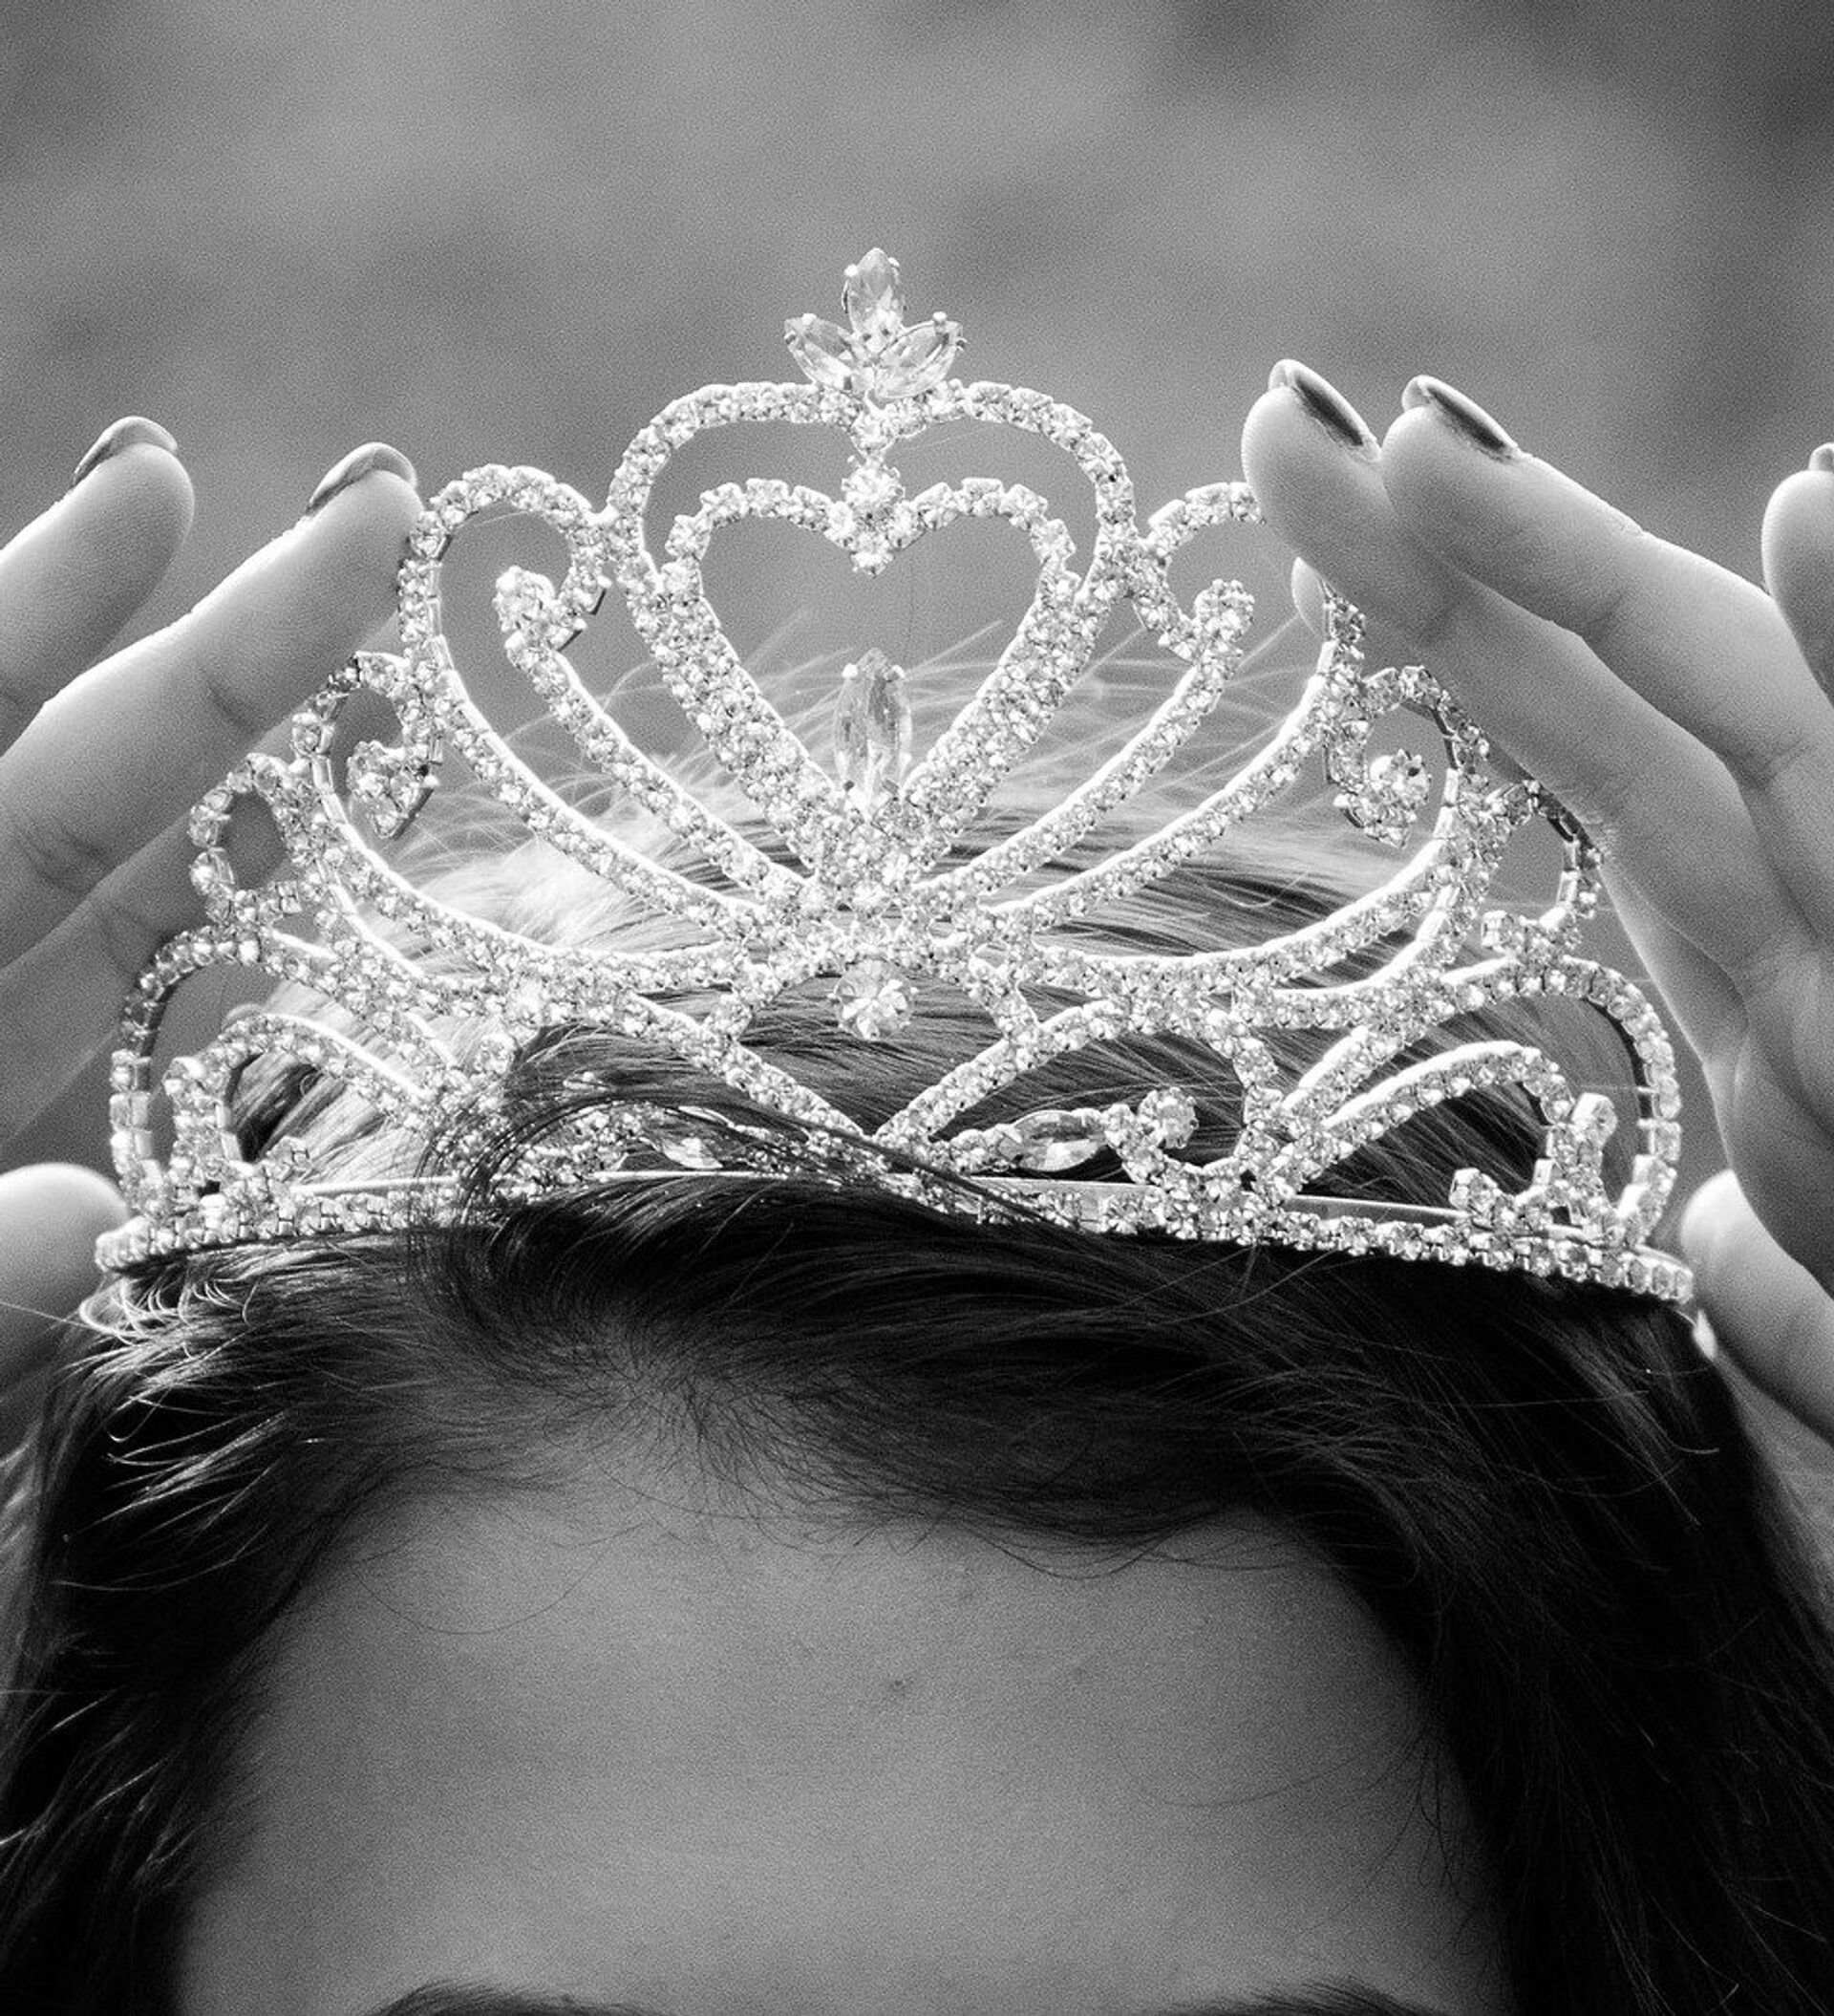 Корона принцесса. Корона королевы красоты. Надела корону. Надевают корону на голову.